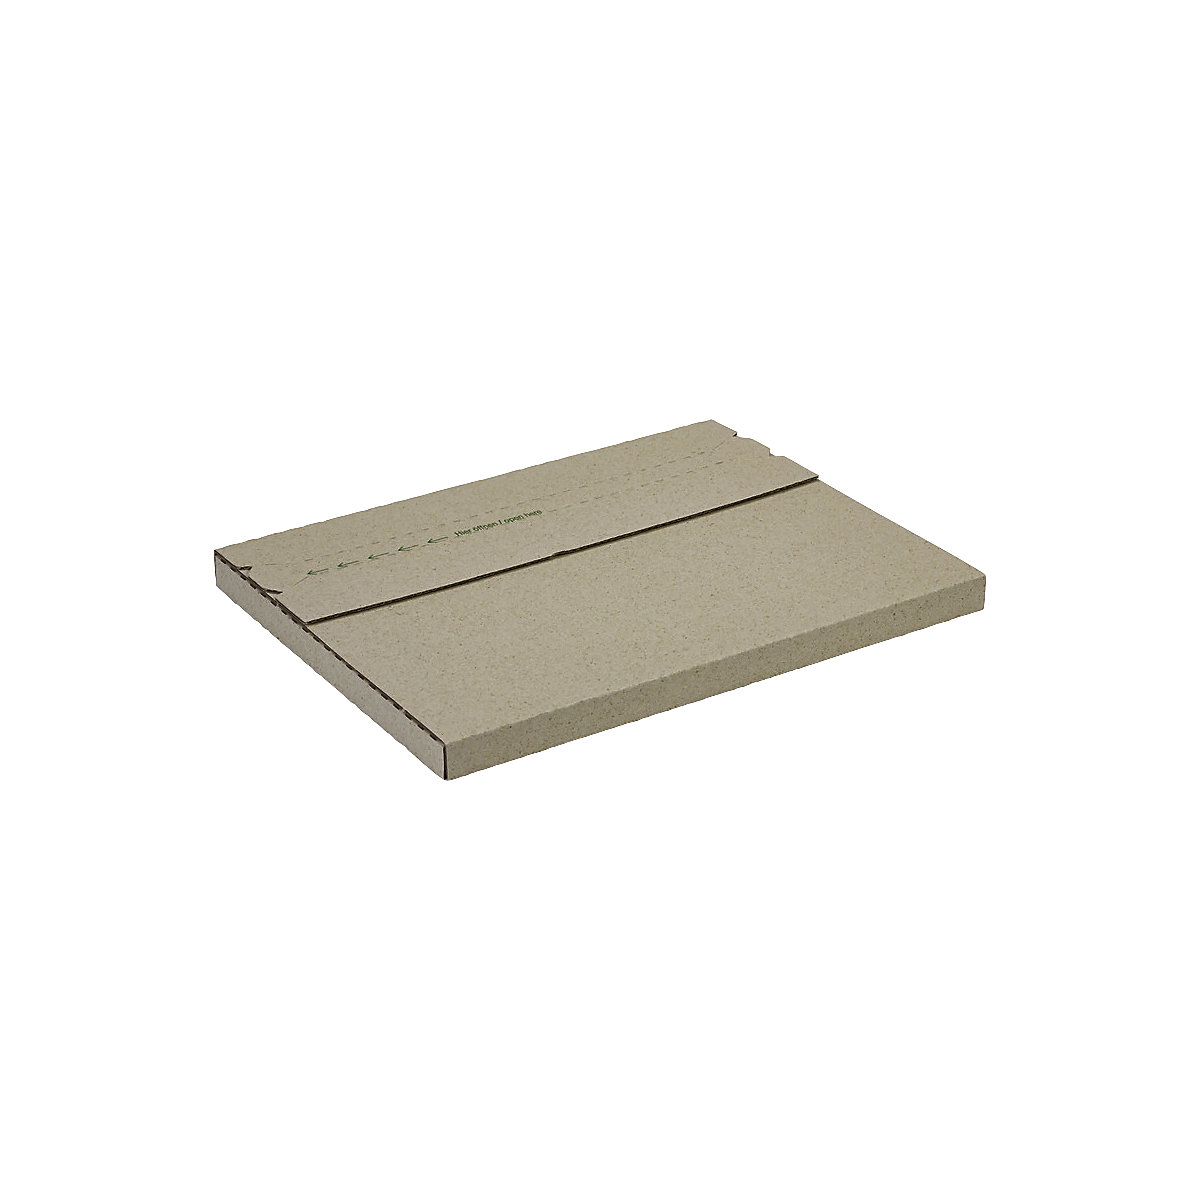 Graspapier-Flachpack terra, selbstklebend, Innen-LxBxH 257 x 207 x 13 mm, ab 300 Stk-2